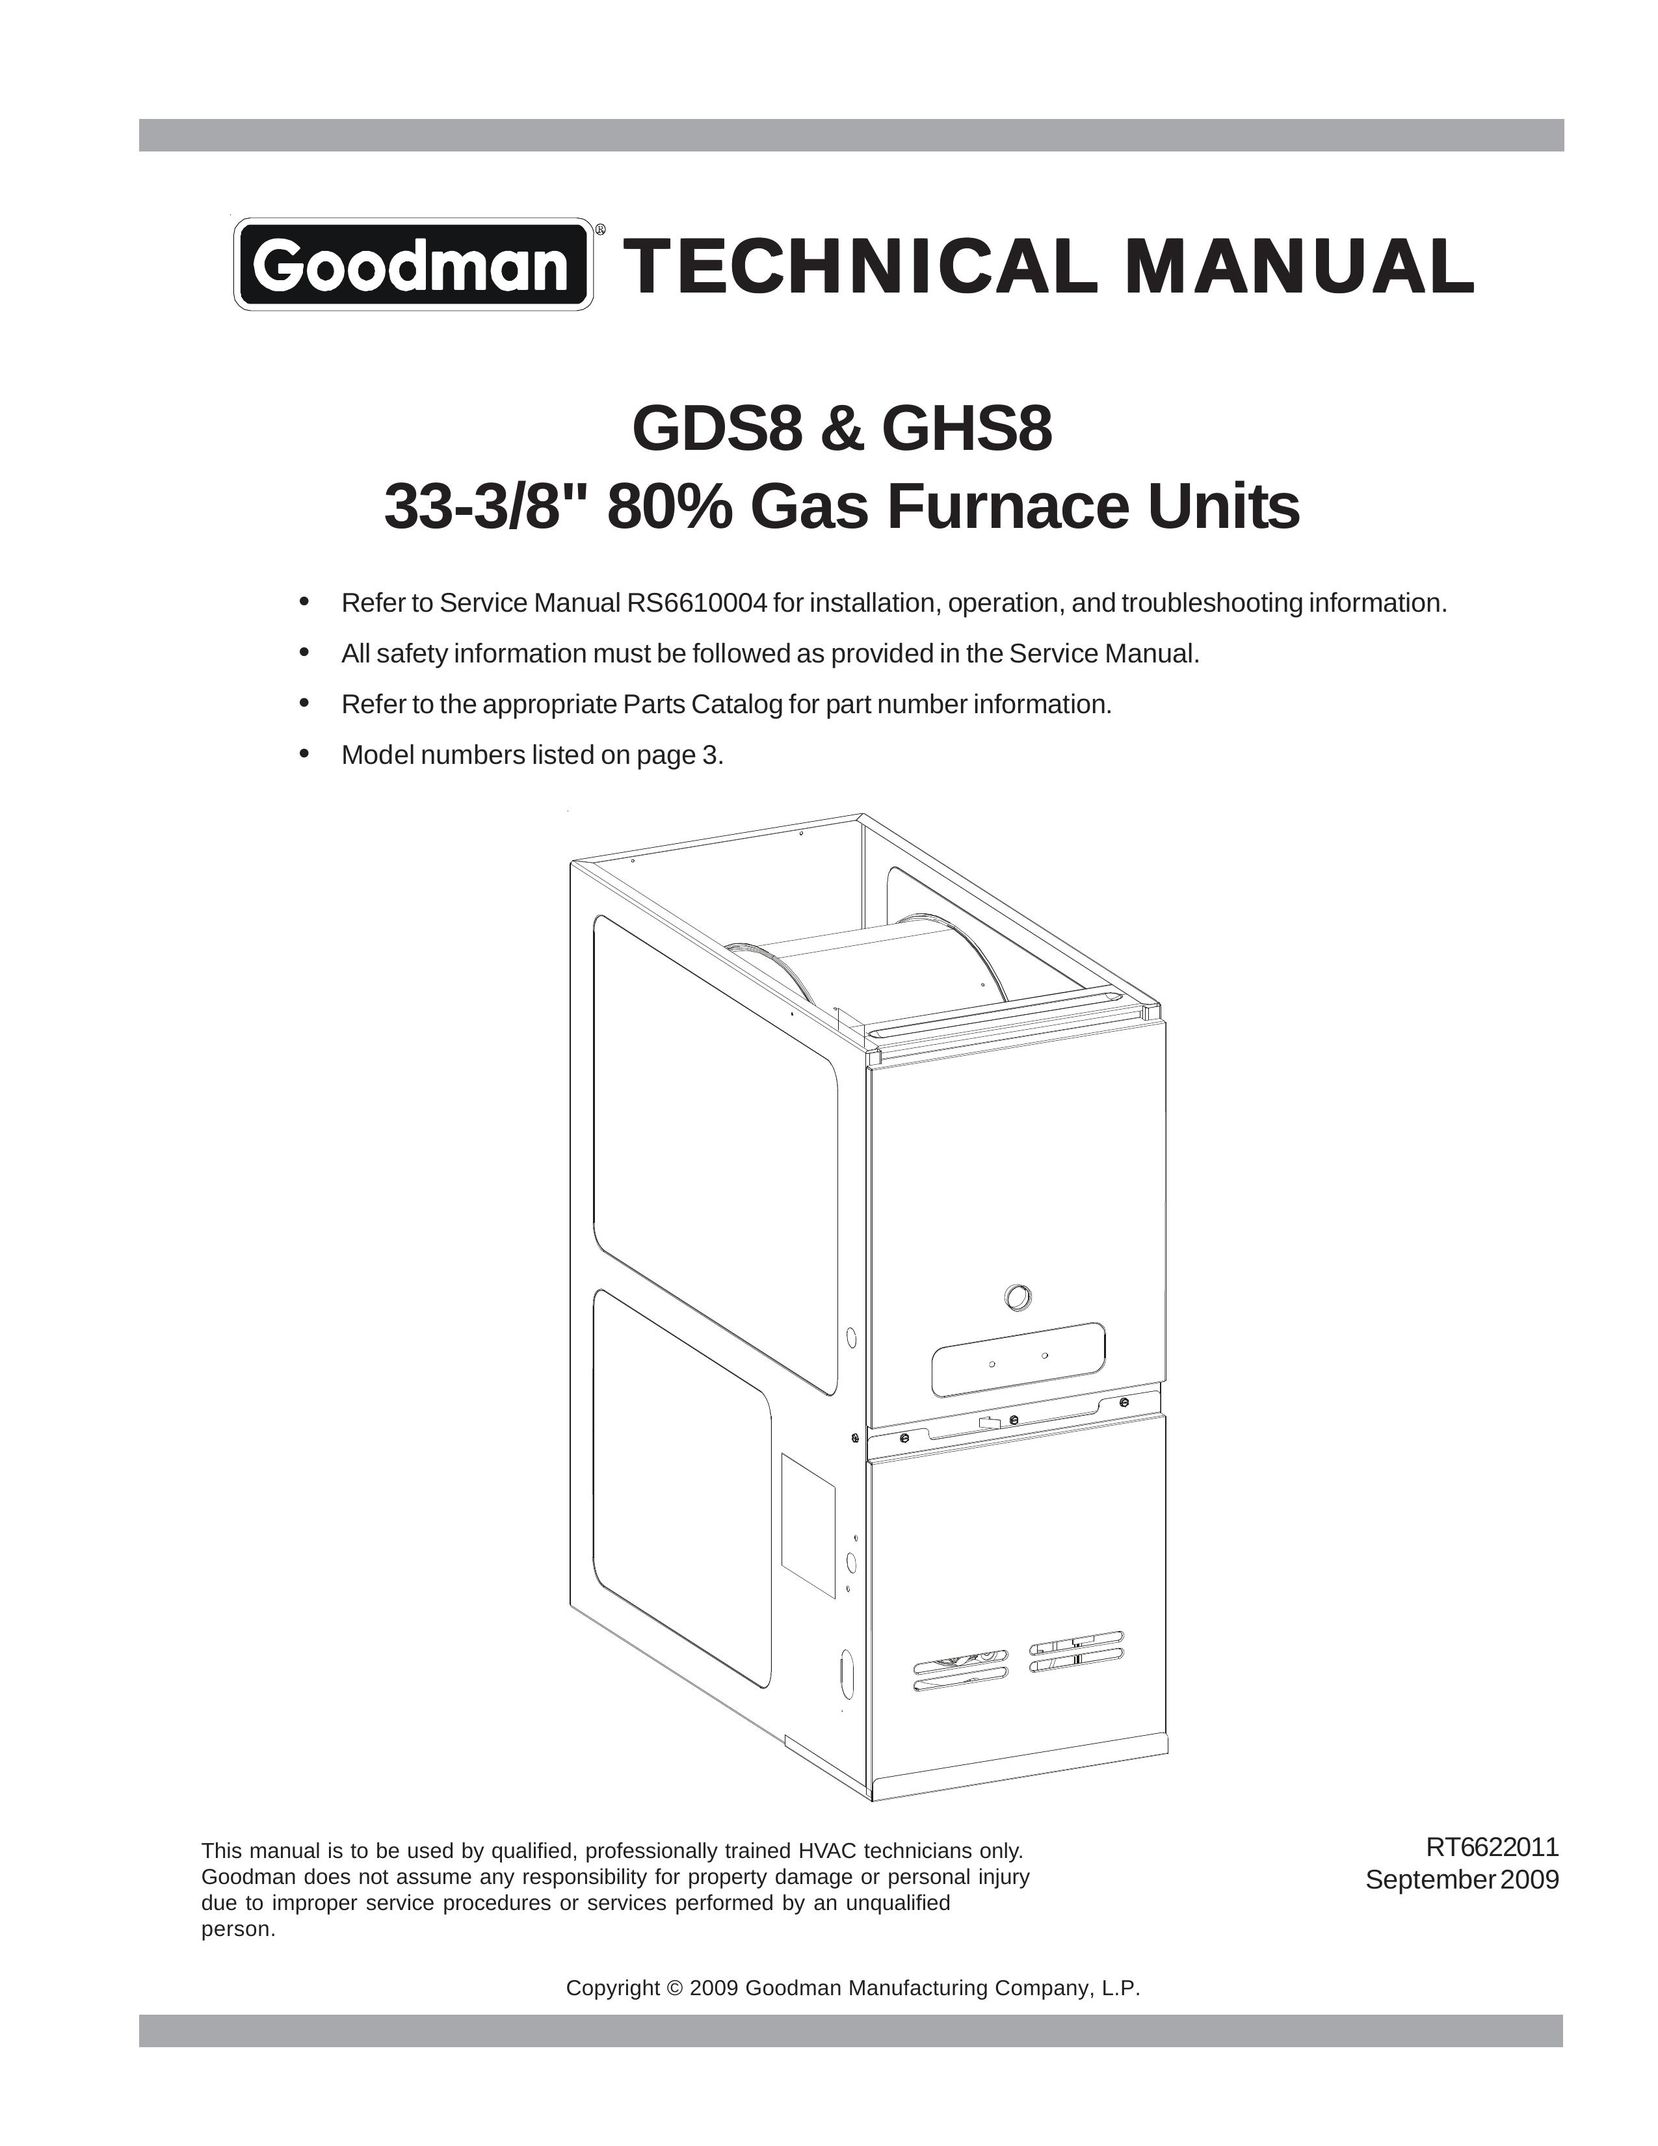 Goodman Mfg GHS8 Gas Heater User Manual